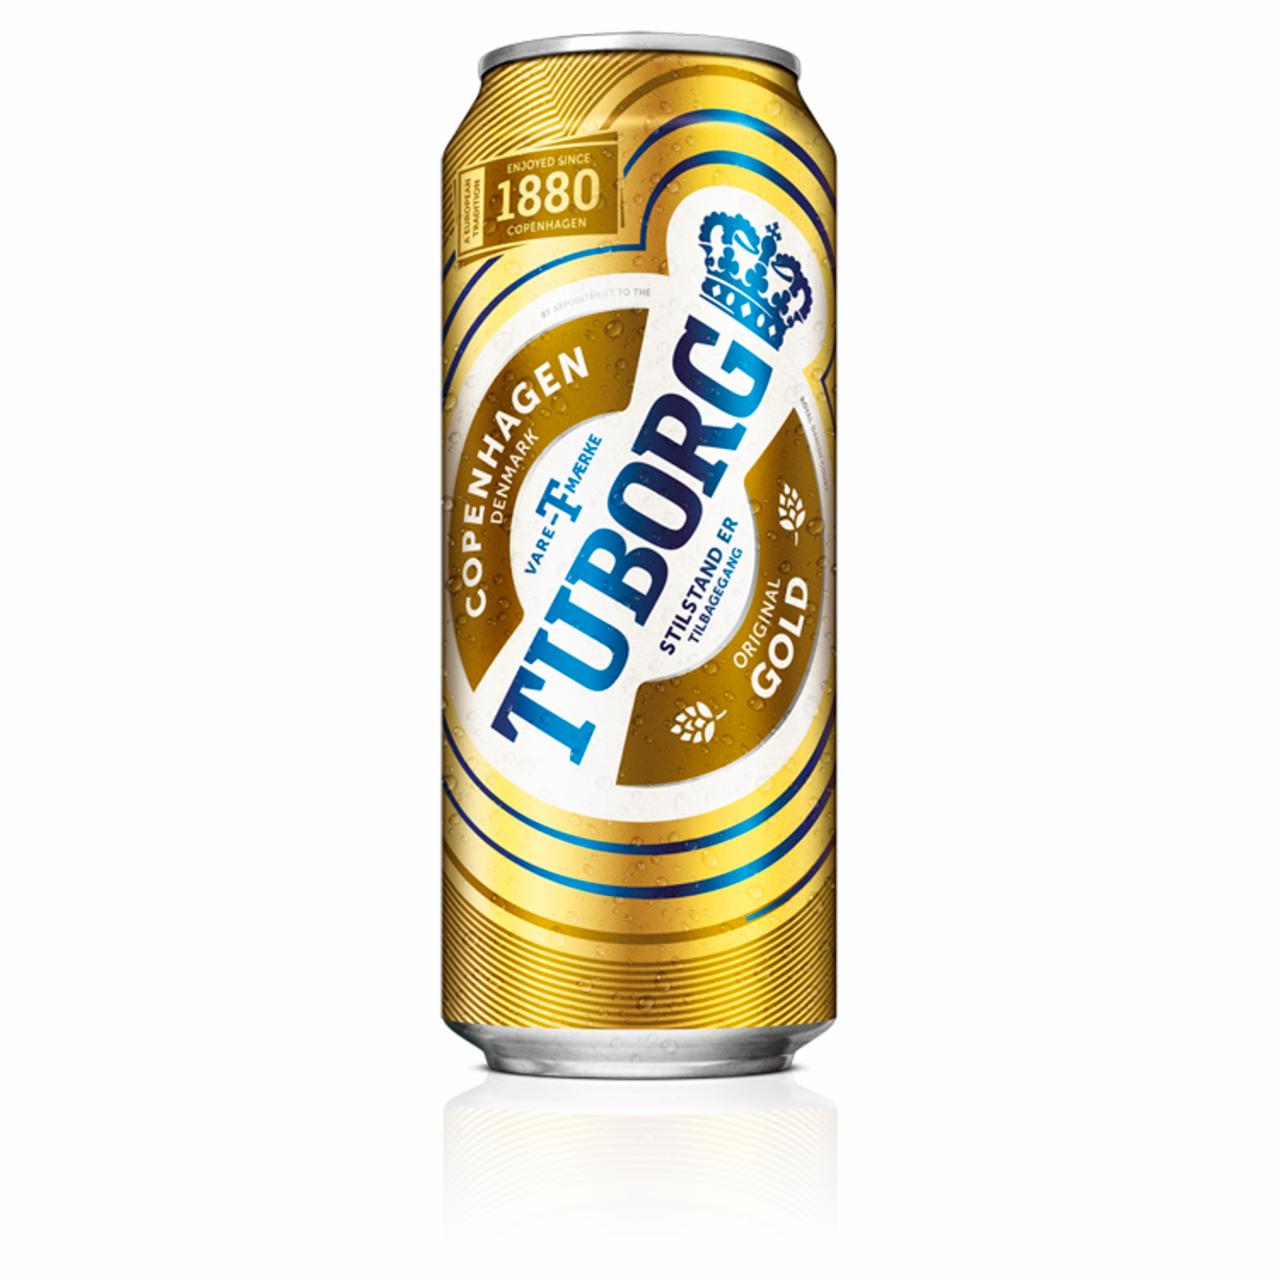 Képek - Tuborg Gold világos sör 5% 0,5 l